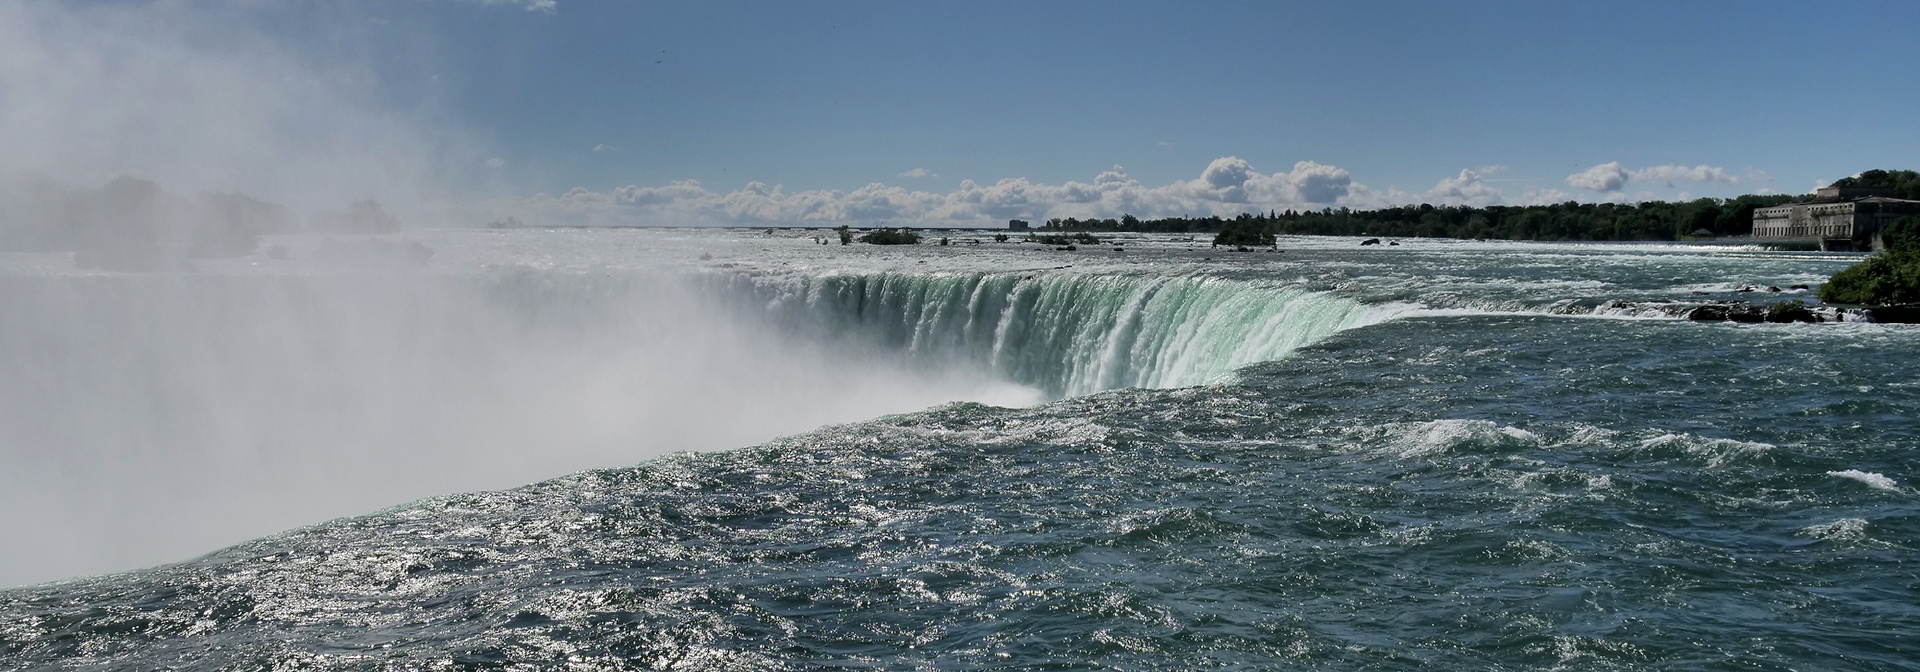 Niagara Falls Pathways